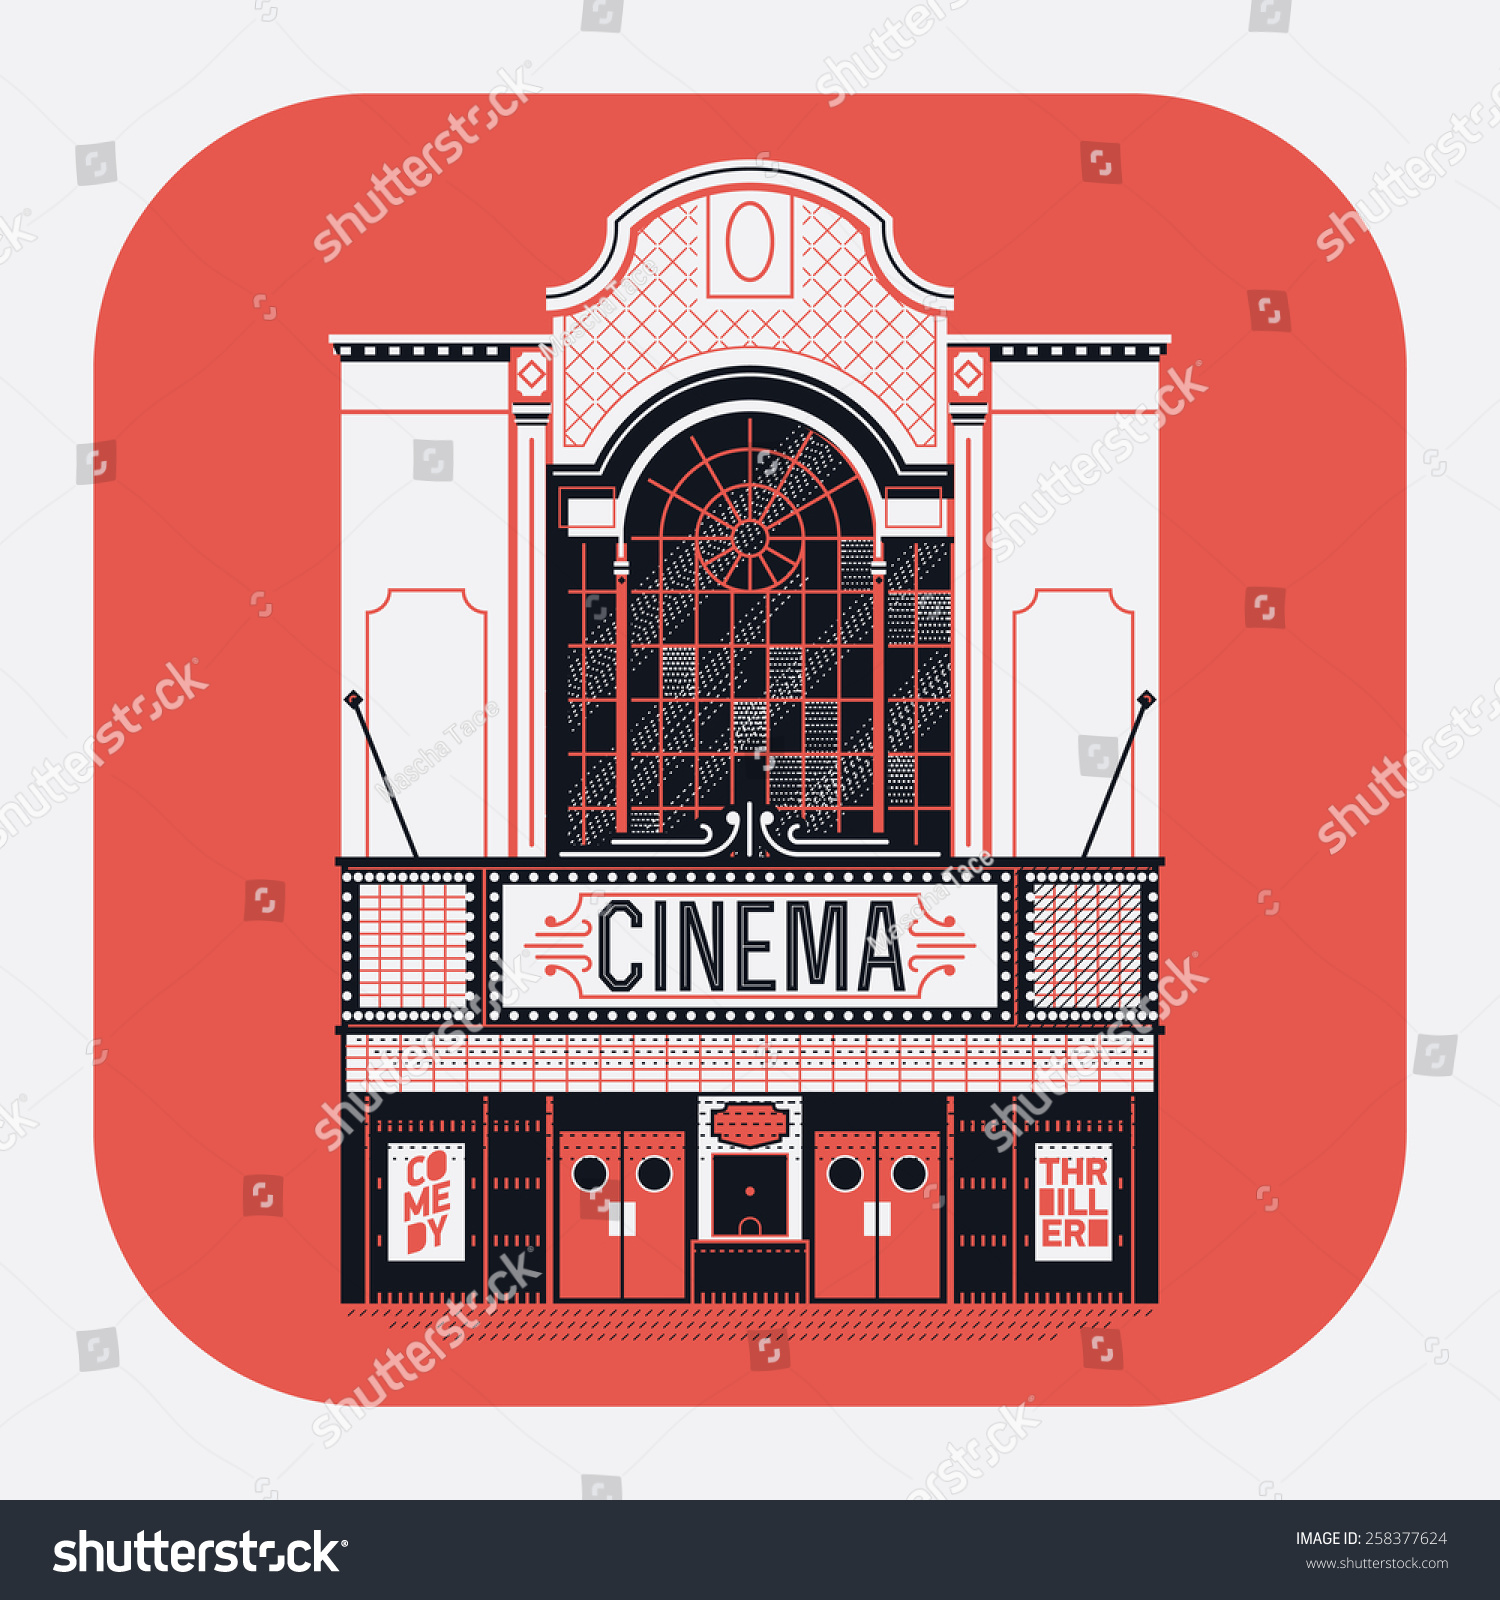 cinema building clipart - photo #15